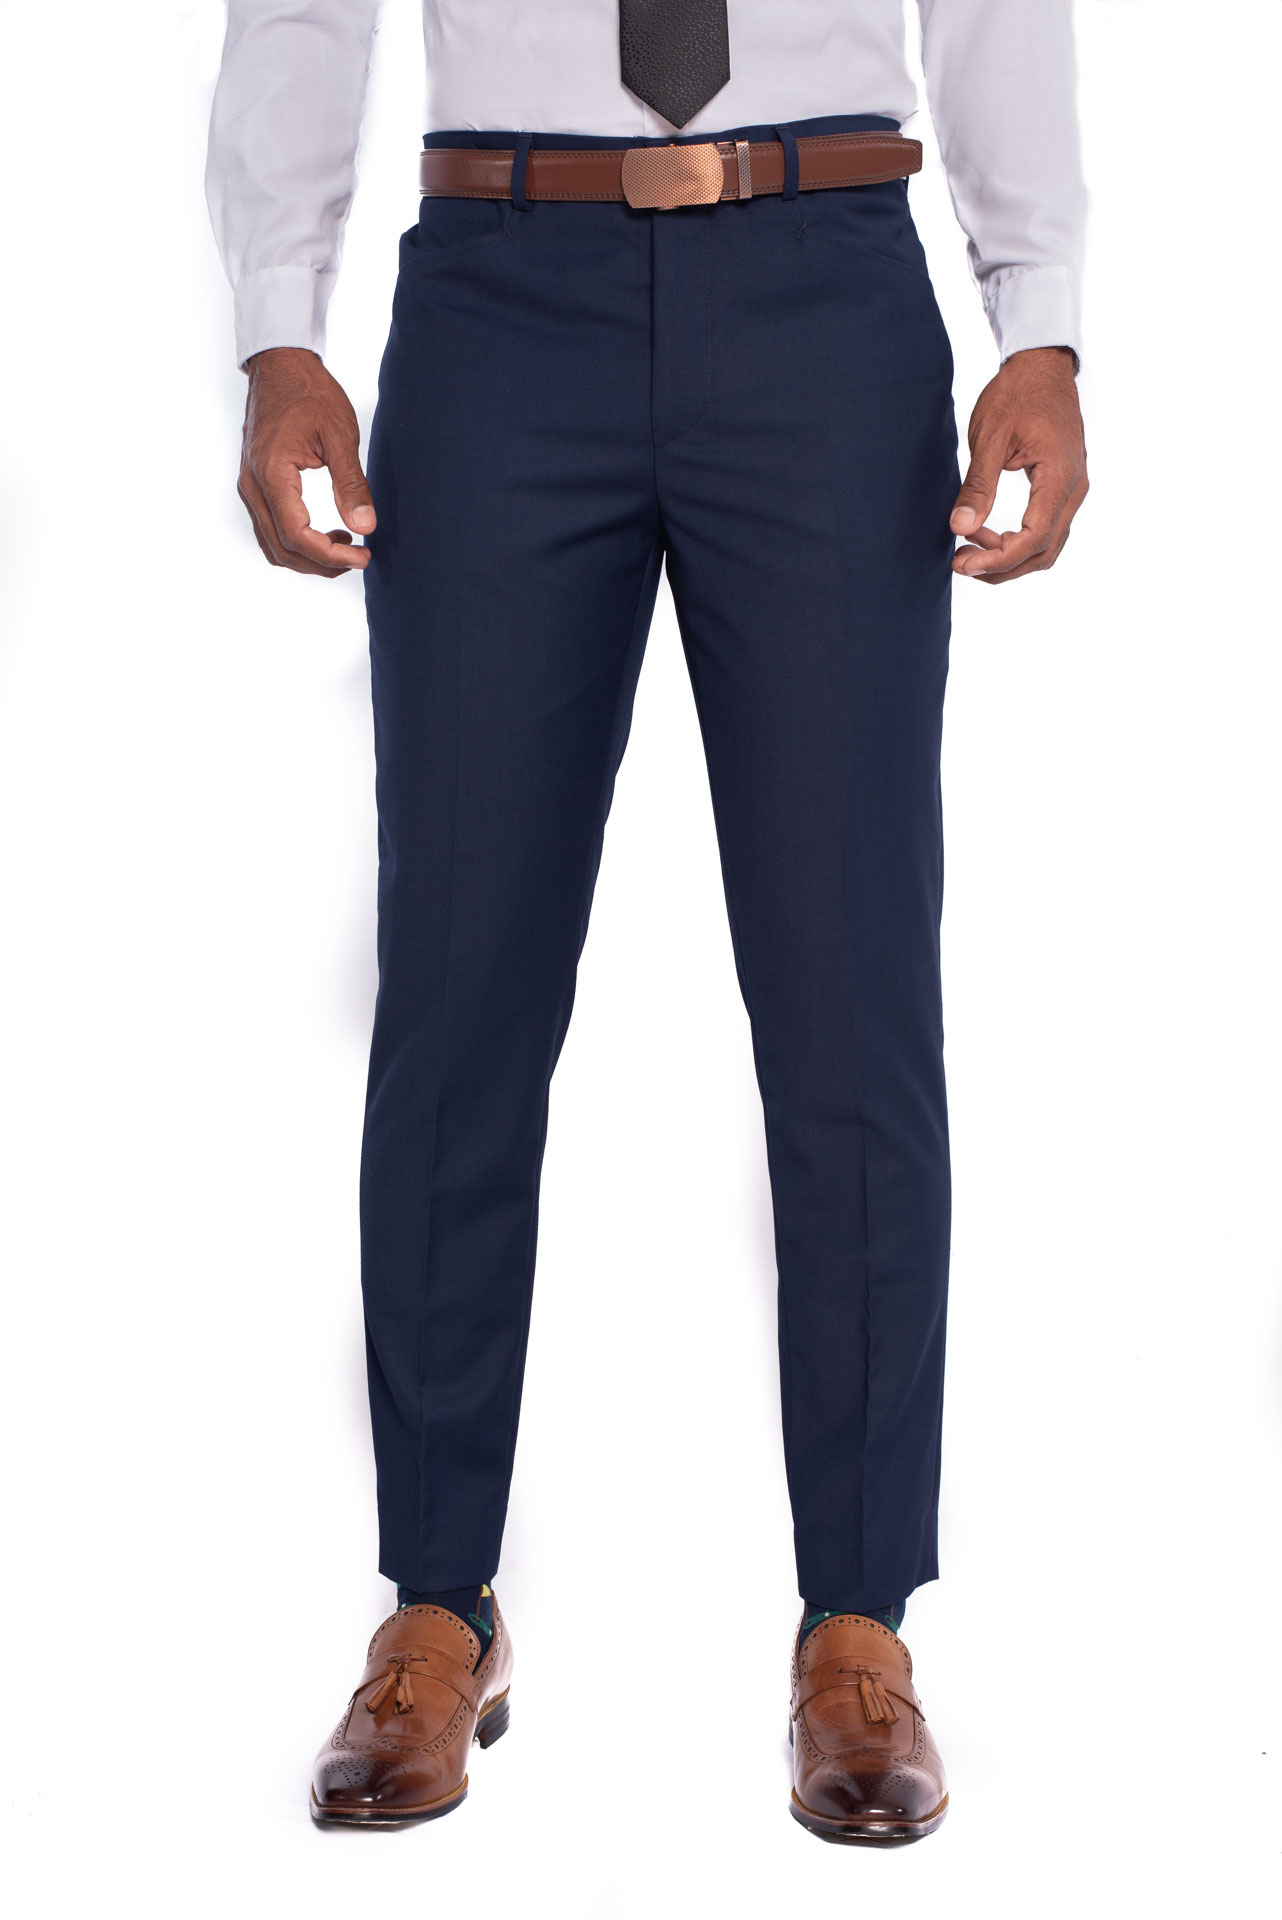 Louis Philippe Sport Slim Fit Men Beige Trousers - Buy Louis Philippe Sport  Slim Fit Men Beige Trousers Online at Best Prices in India | Flipkart.com